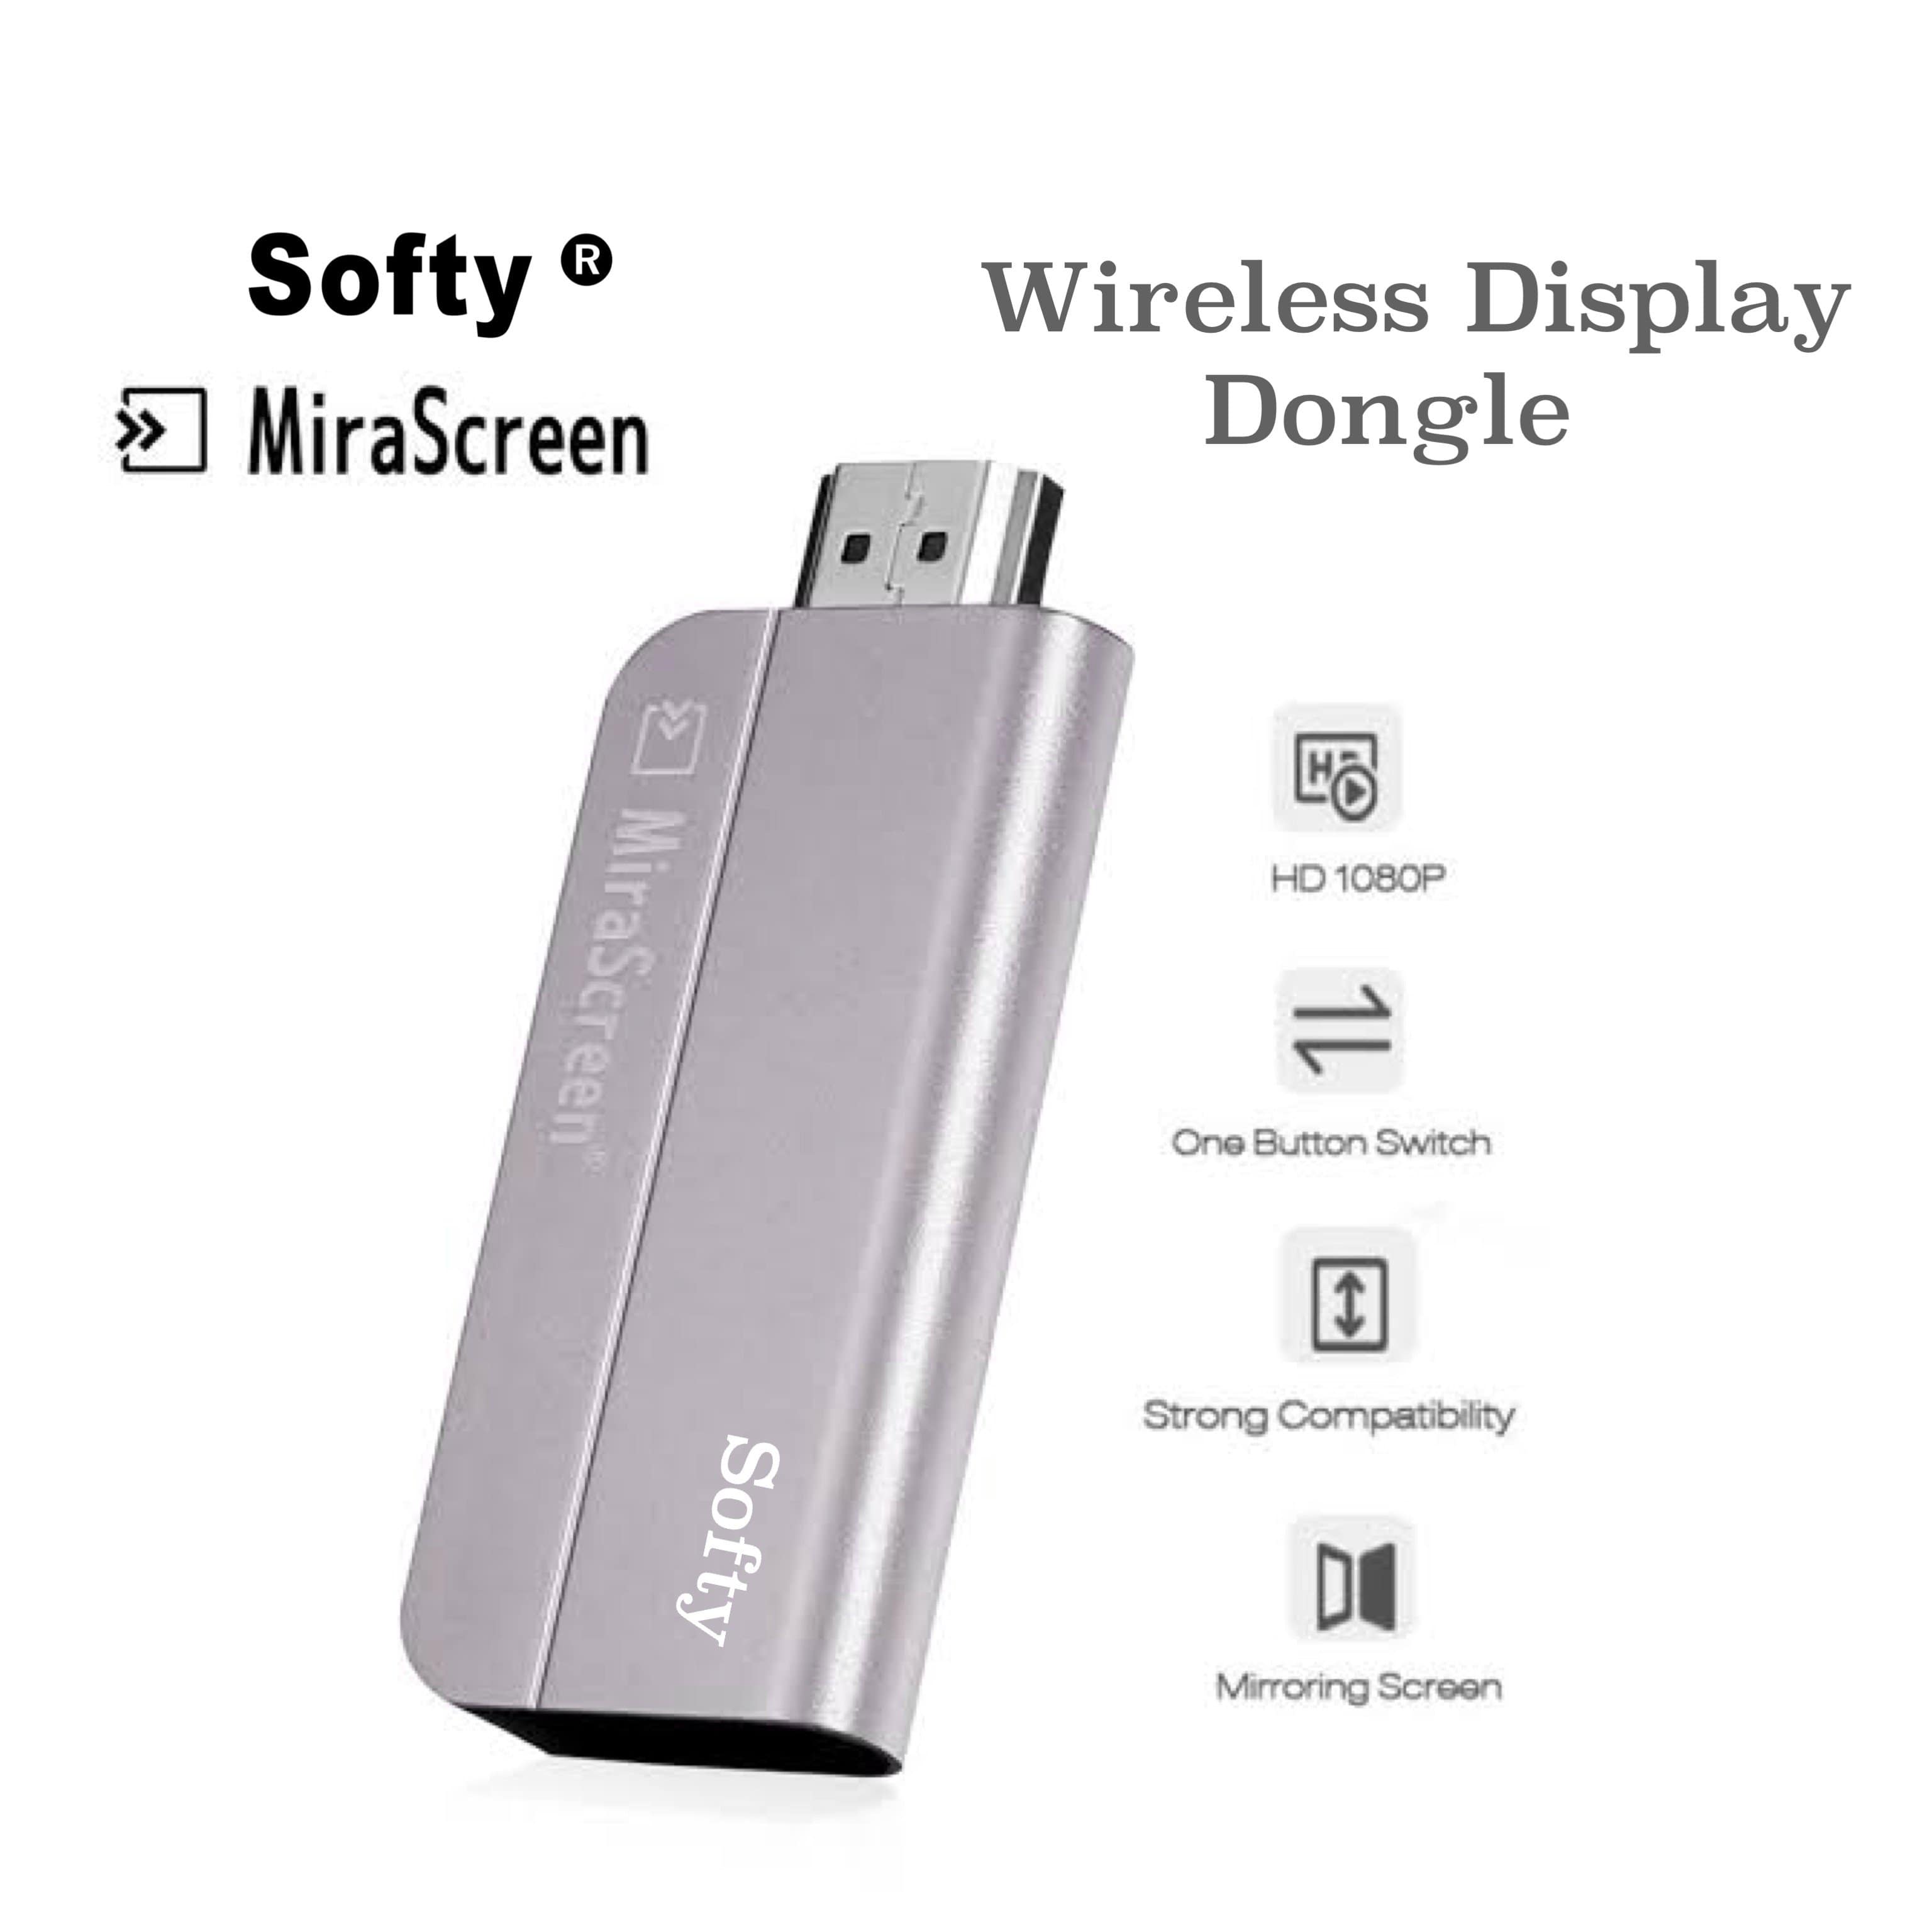 Softy premium quality wireless display Dongle (mira screen